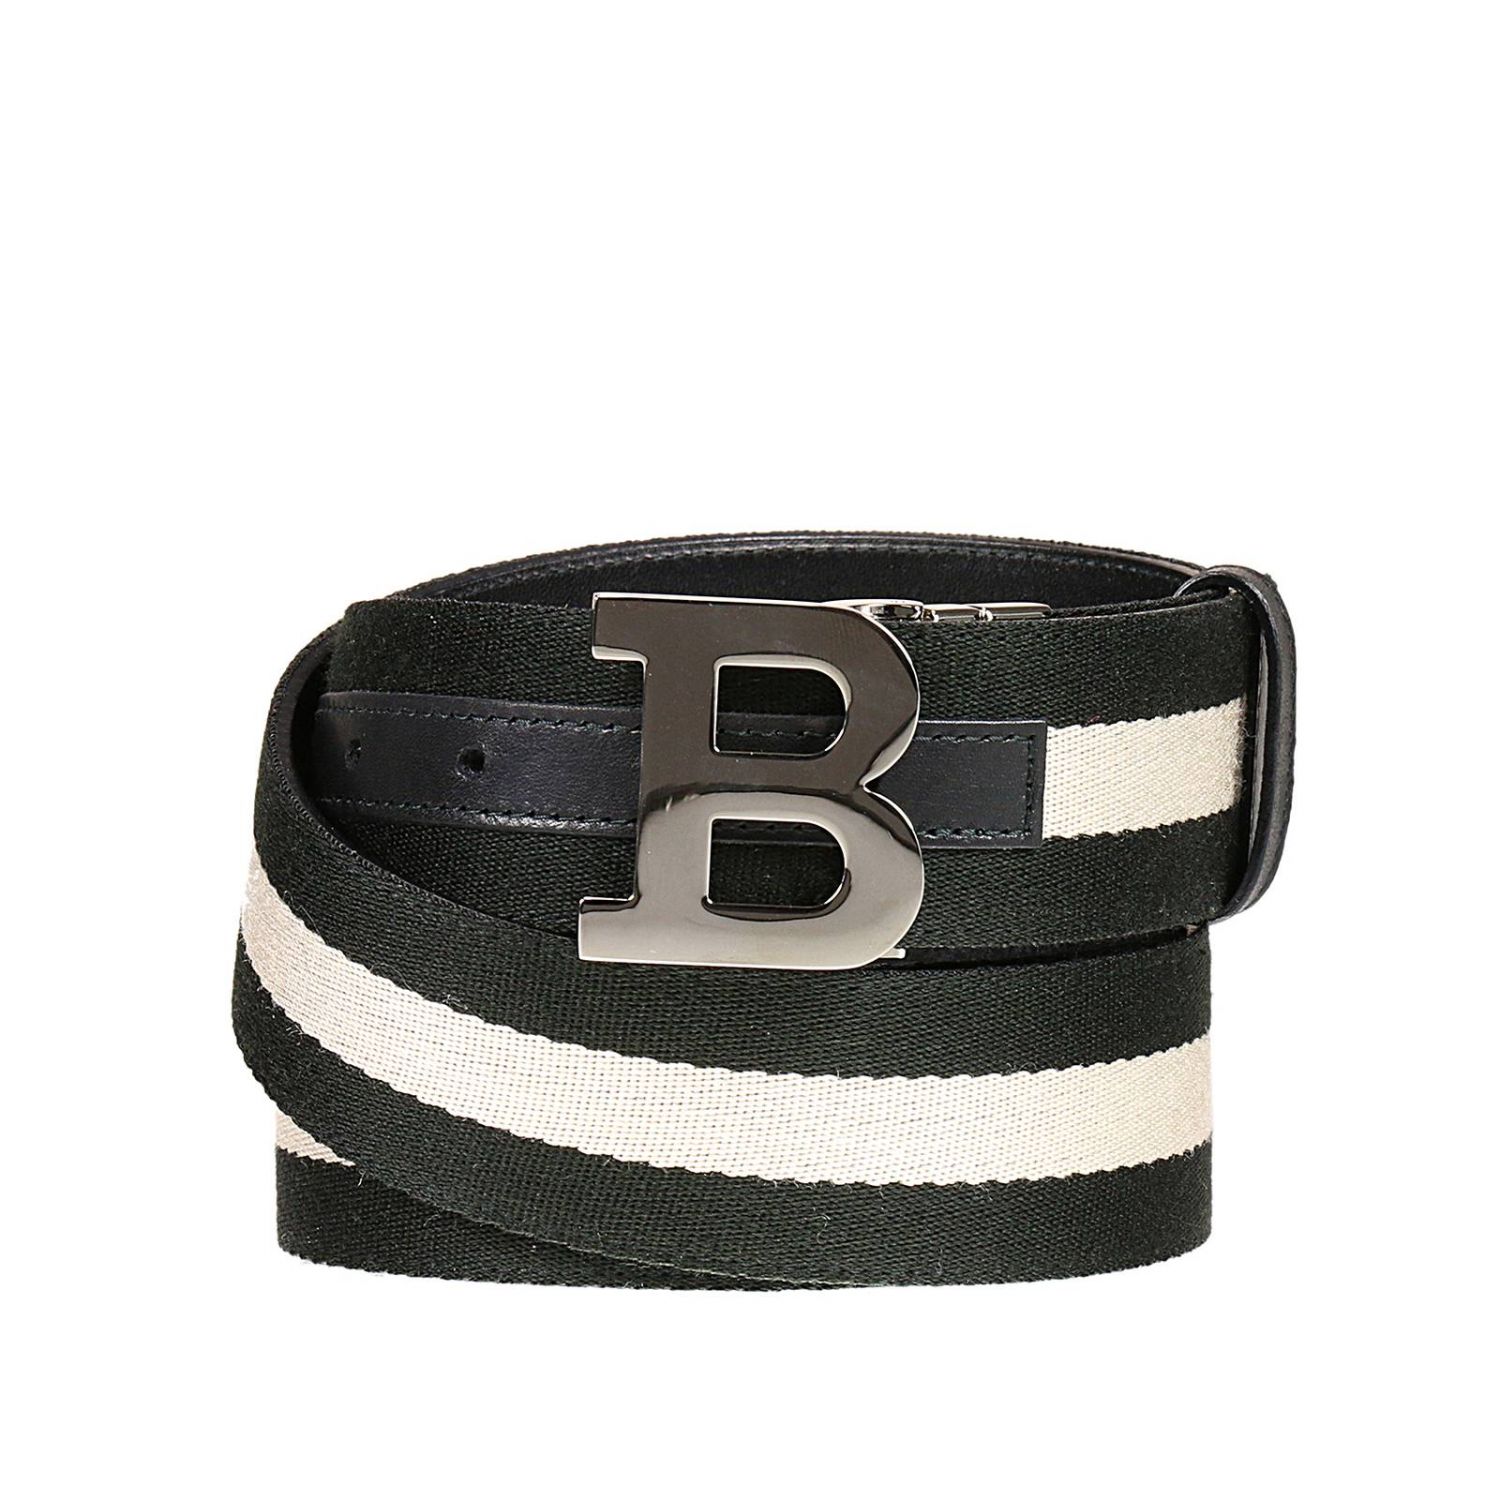 Bally Outlet: Belts men | Belt Bally Men Black | Belt Bally B-BUCKEL 40 ...